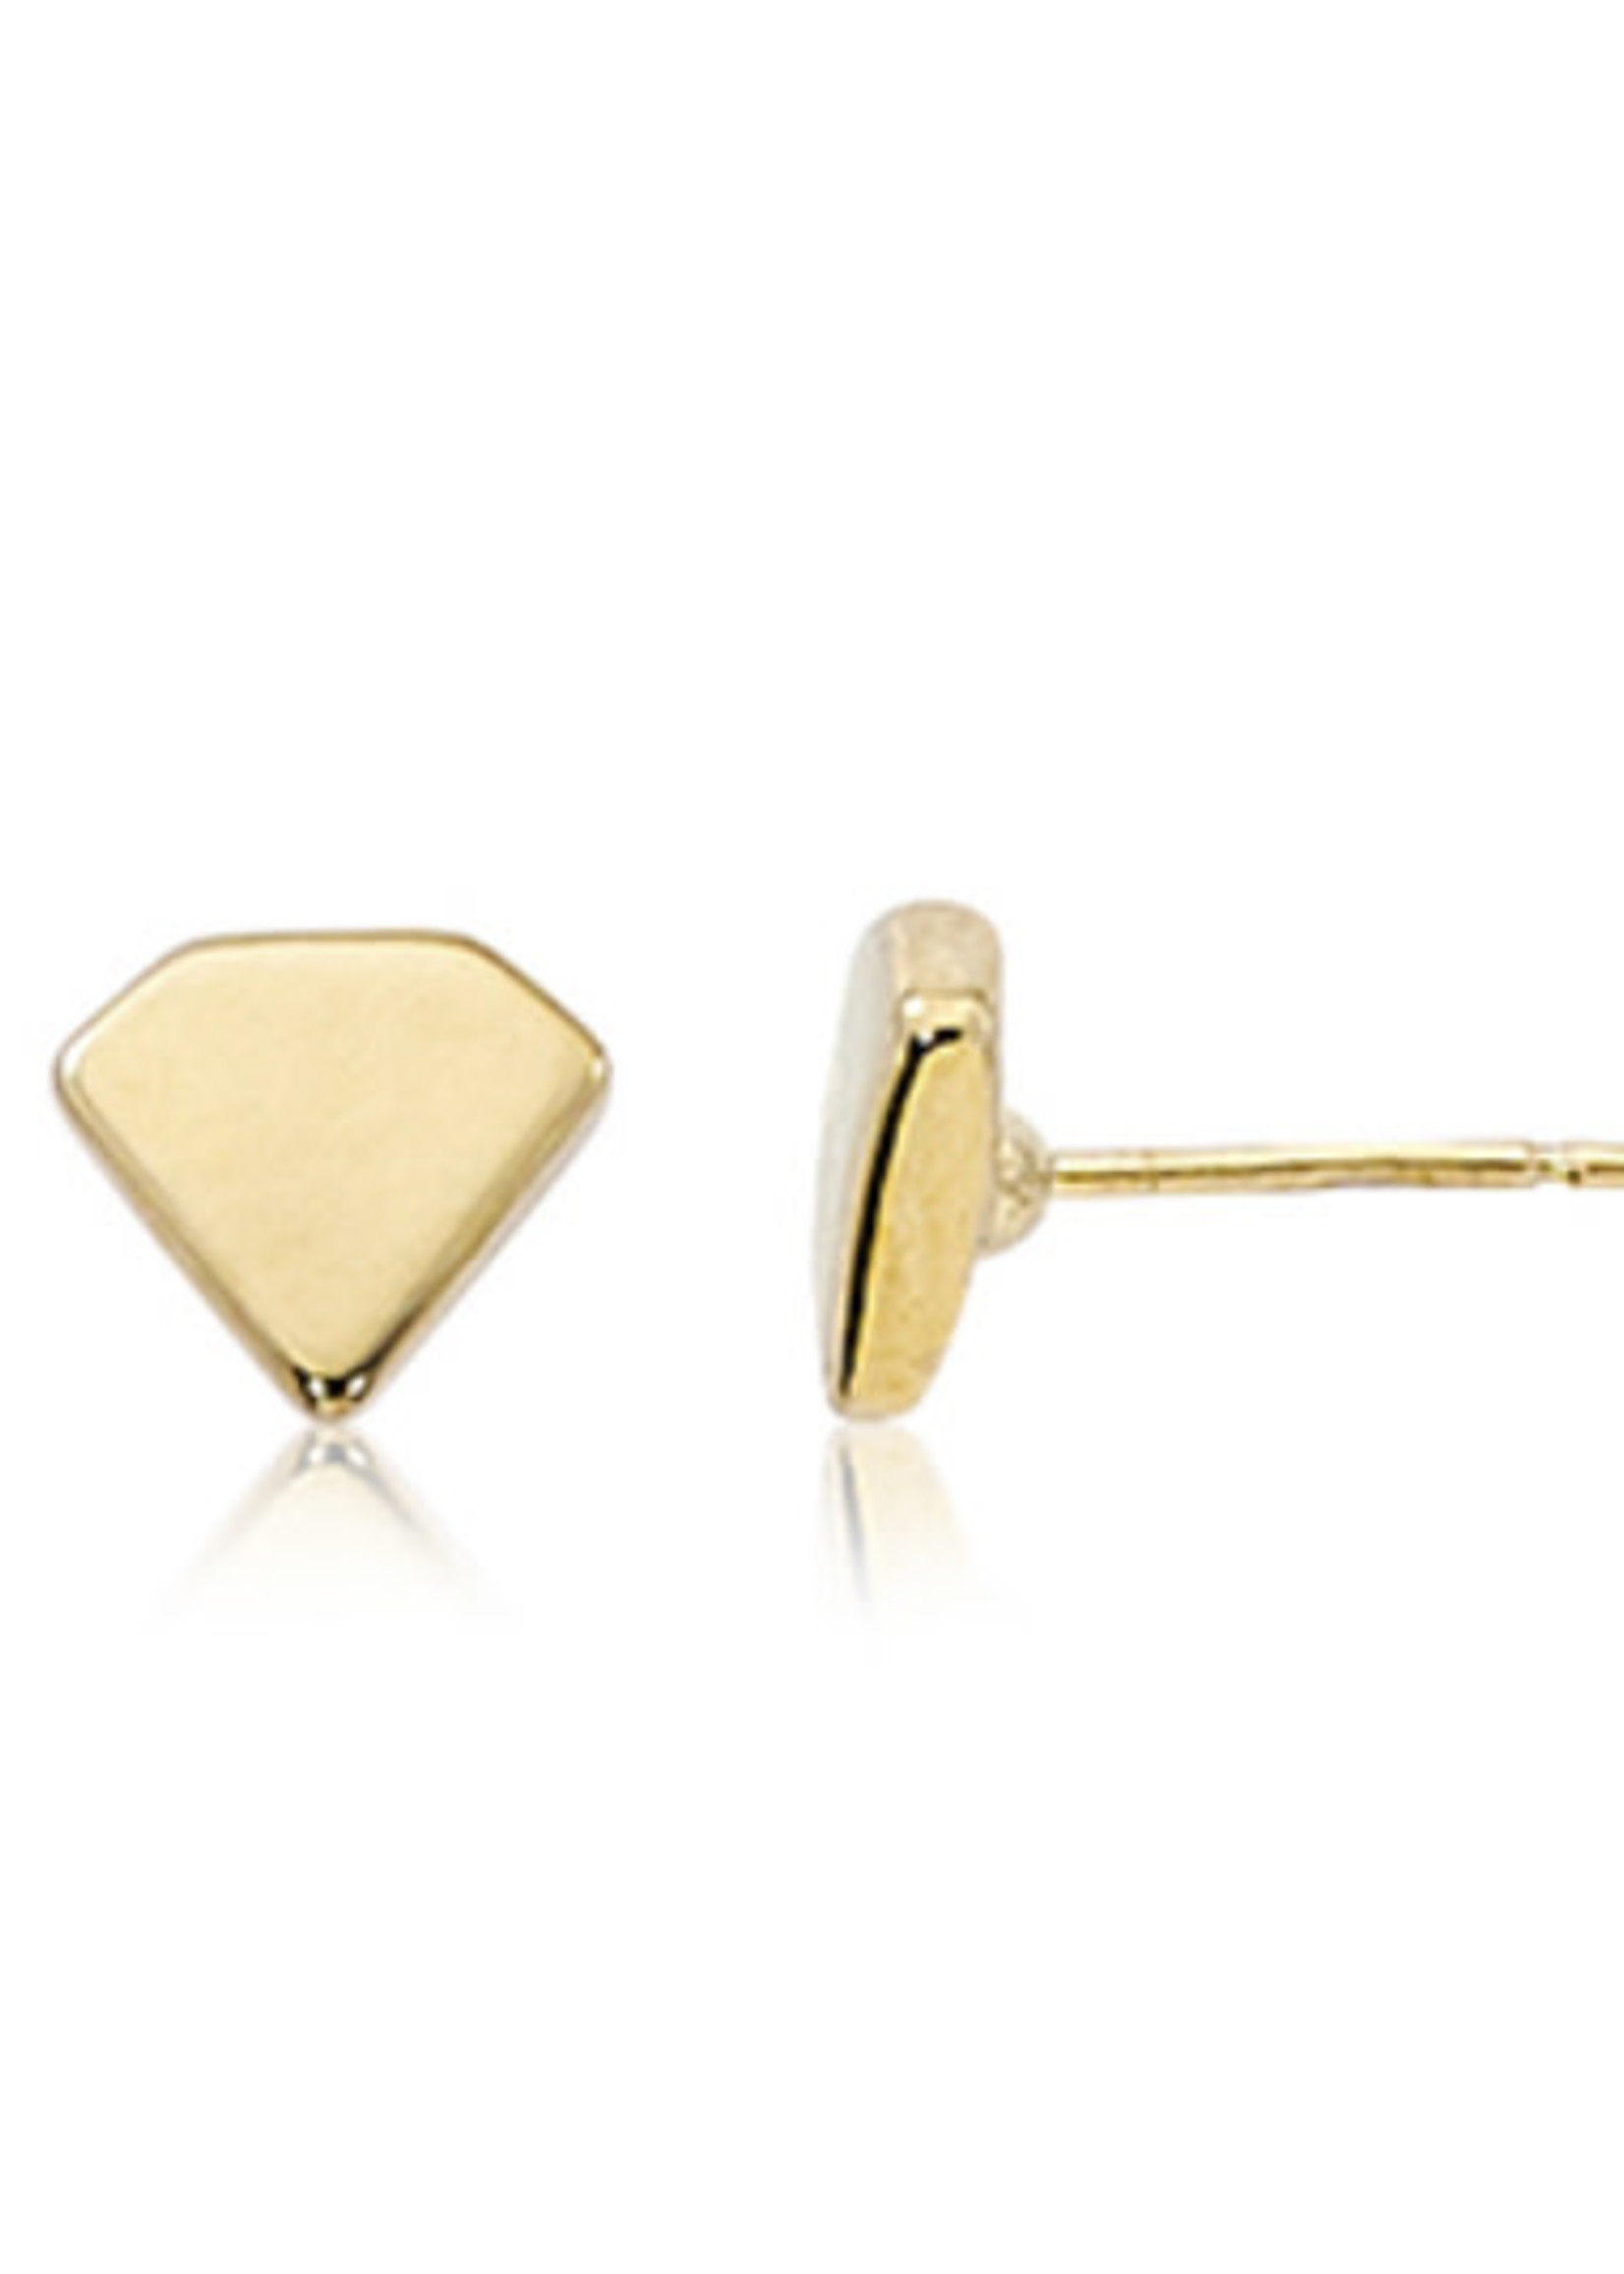 Carla 14kY diamond shaped earrings